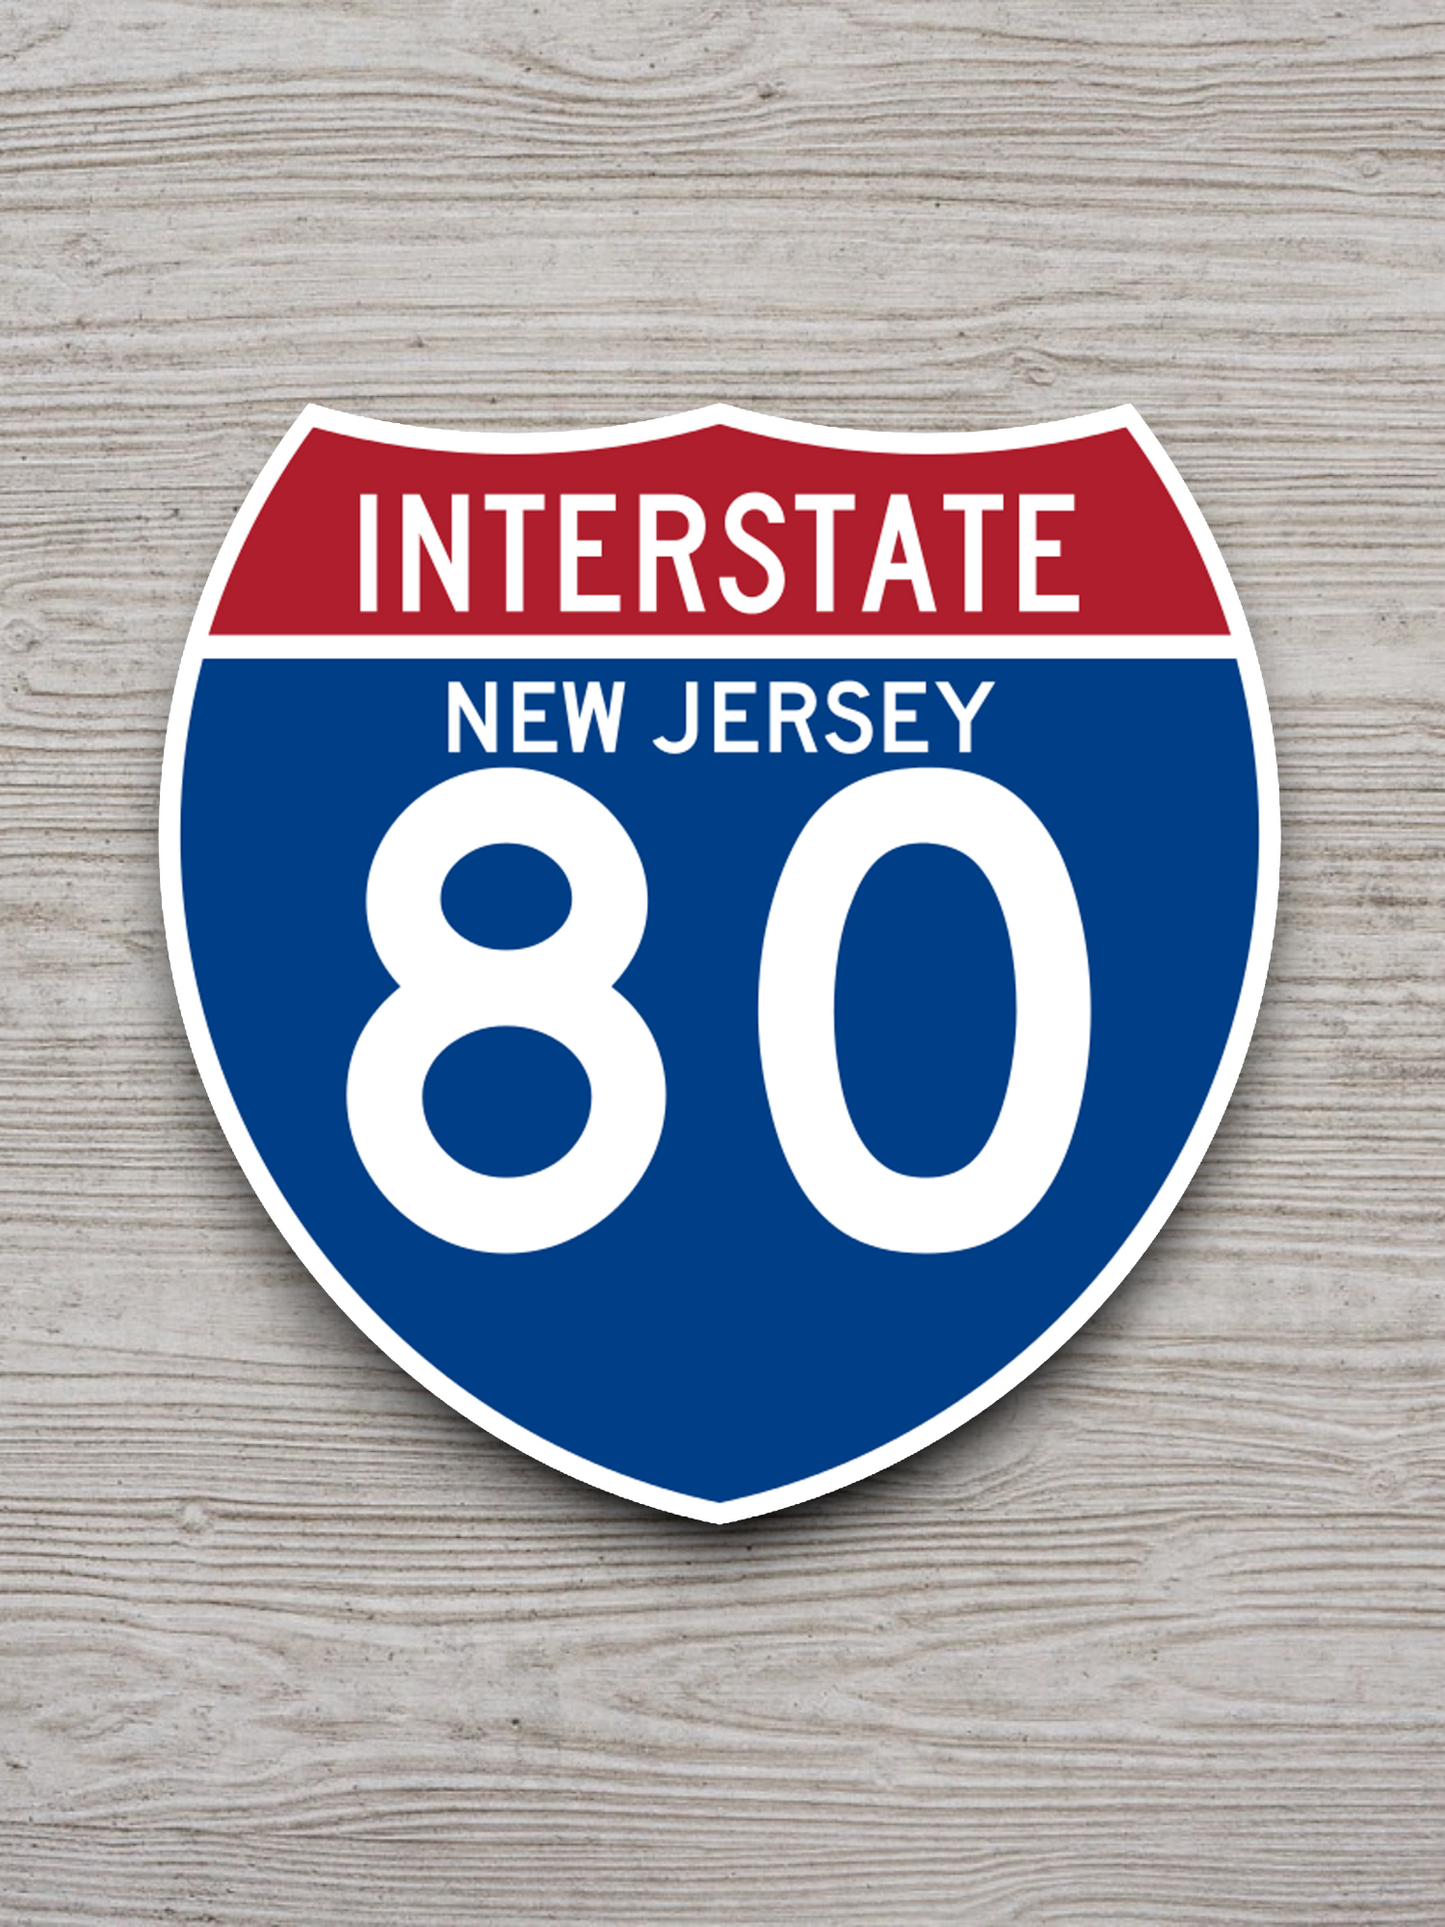 Interstate I-80 New Jersey - Road Sign Sticker